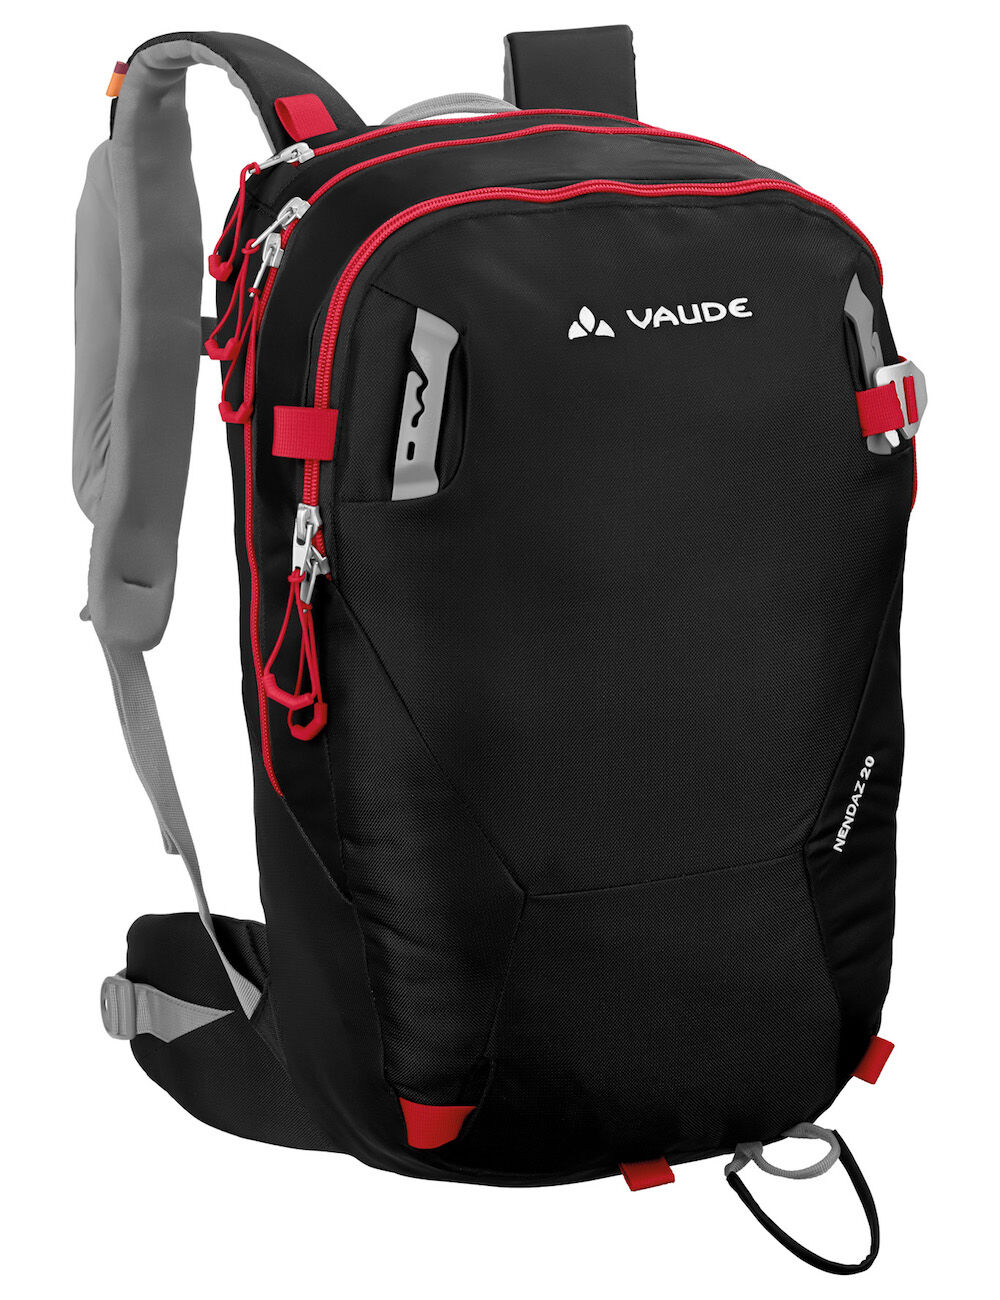 Vaude - Nendaz 20 - Ski Touring backpack